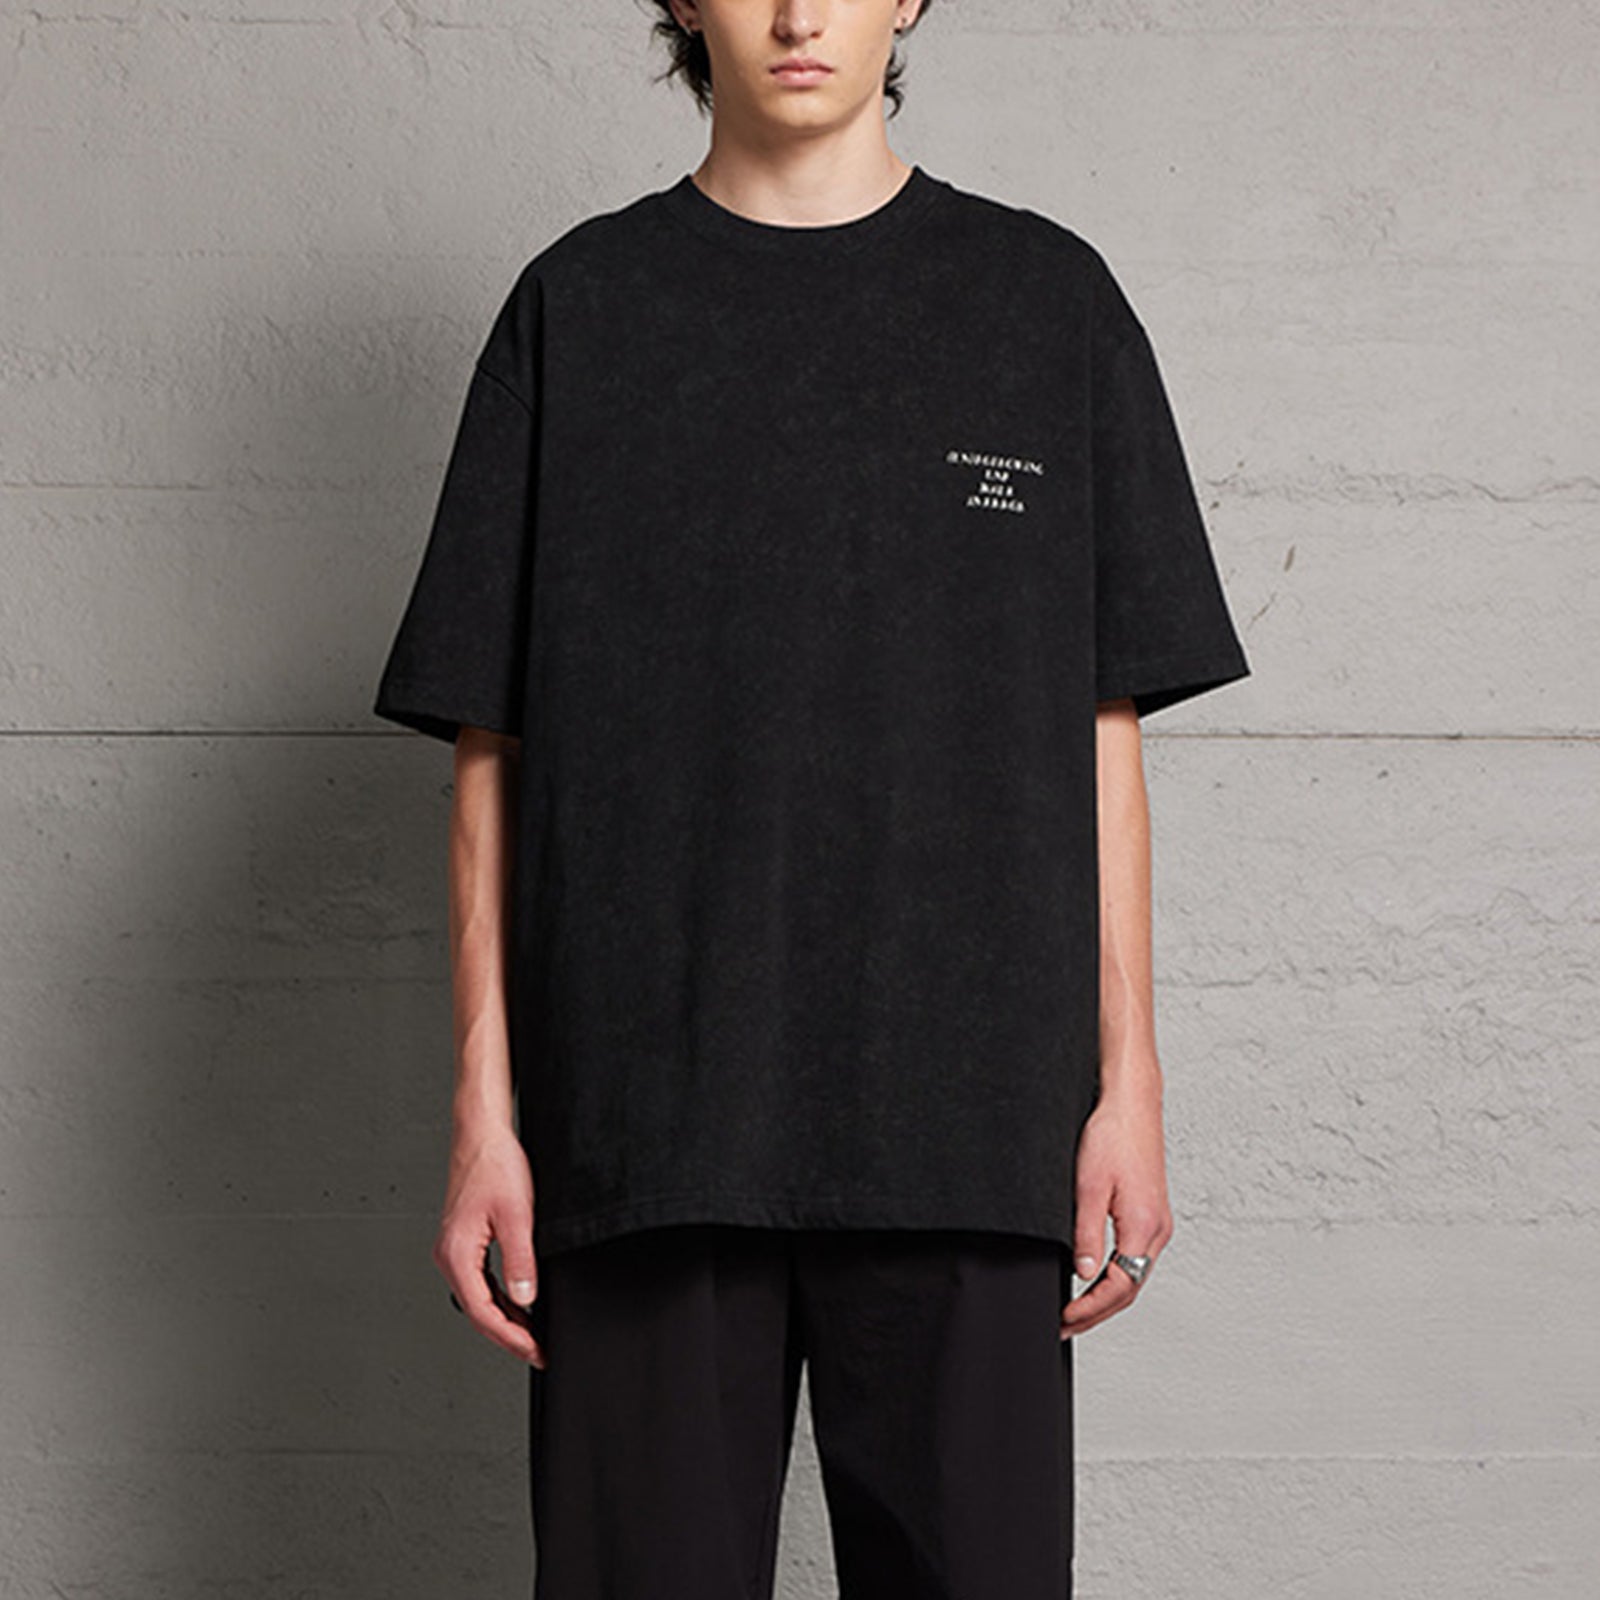 Round Neck Short-sleeved T-shirt With Letter Print And Stir-fried Color, Distressed Black, Spring Summer Men